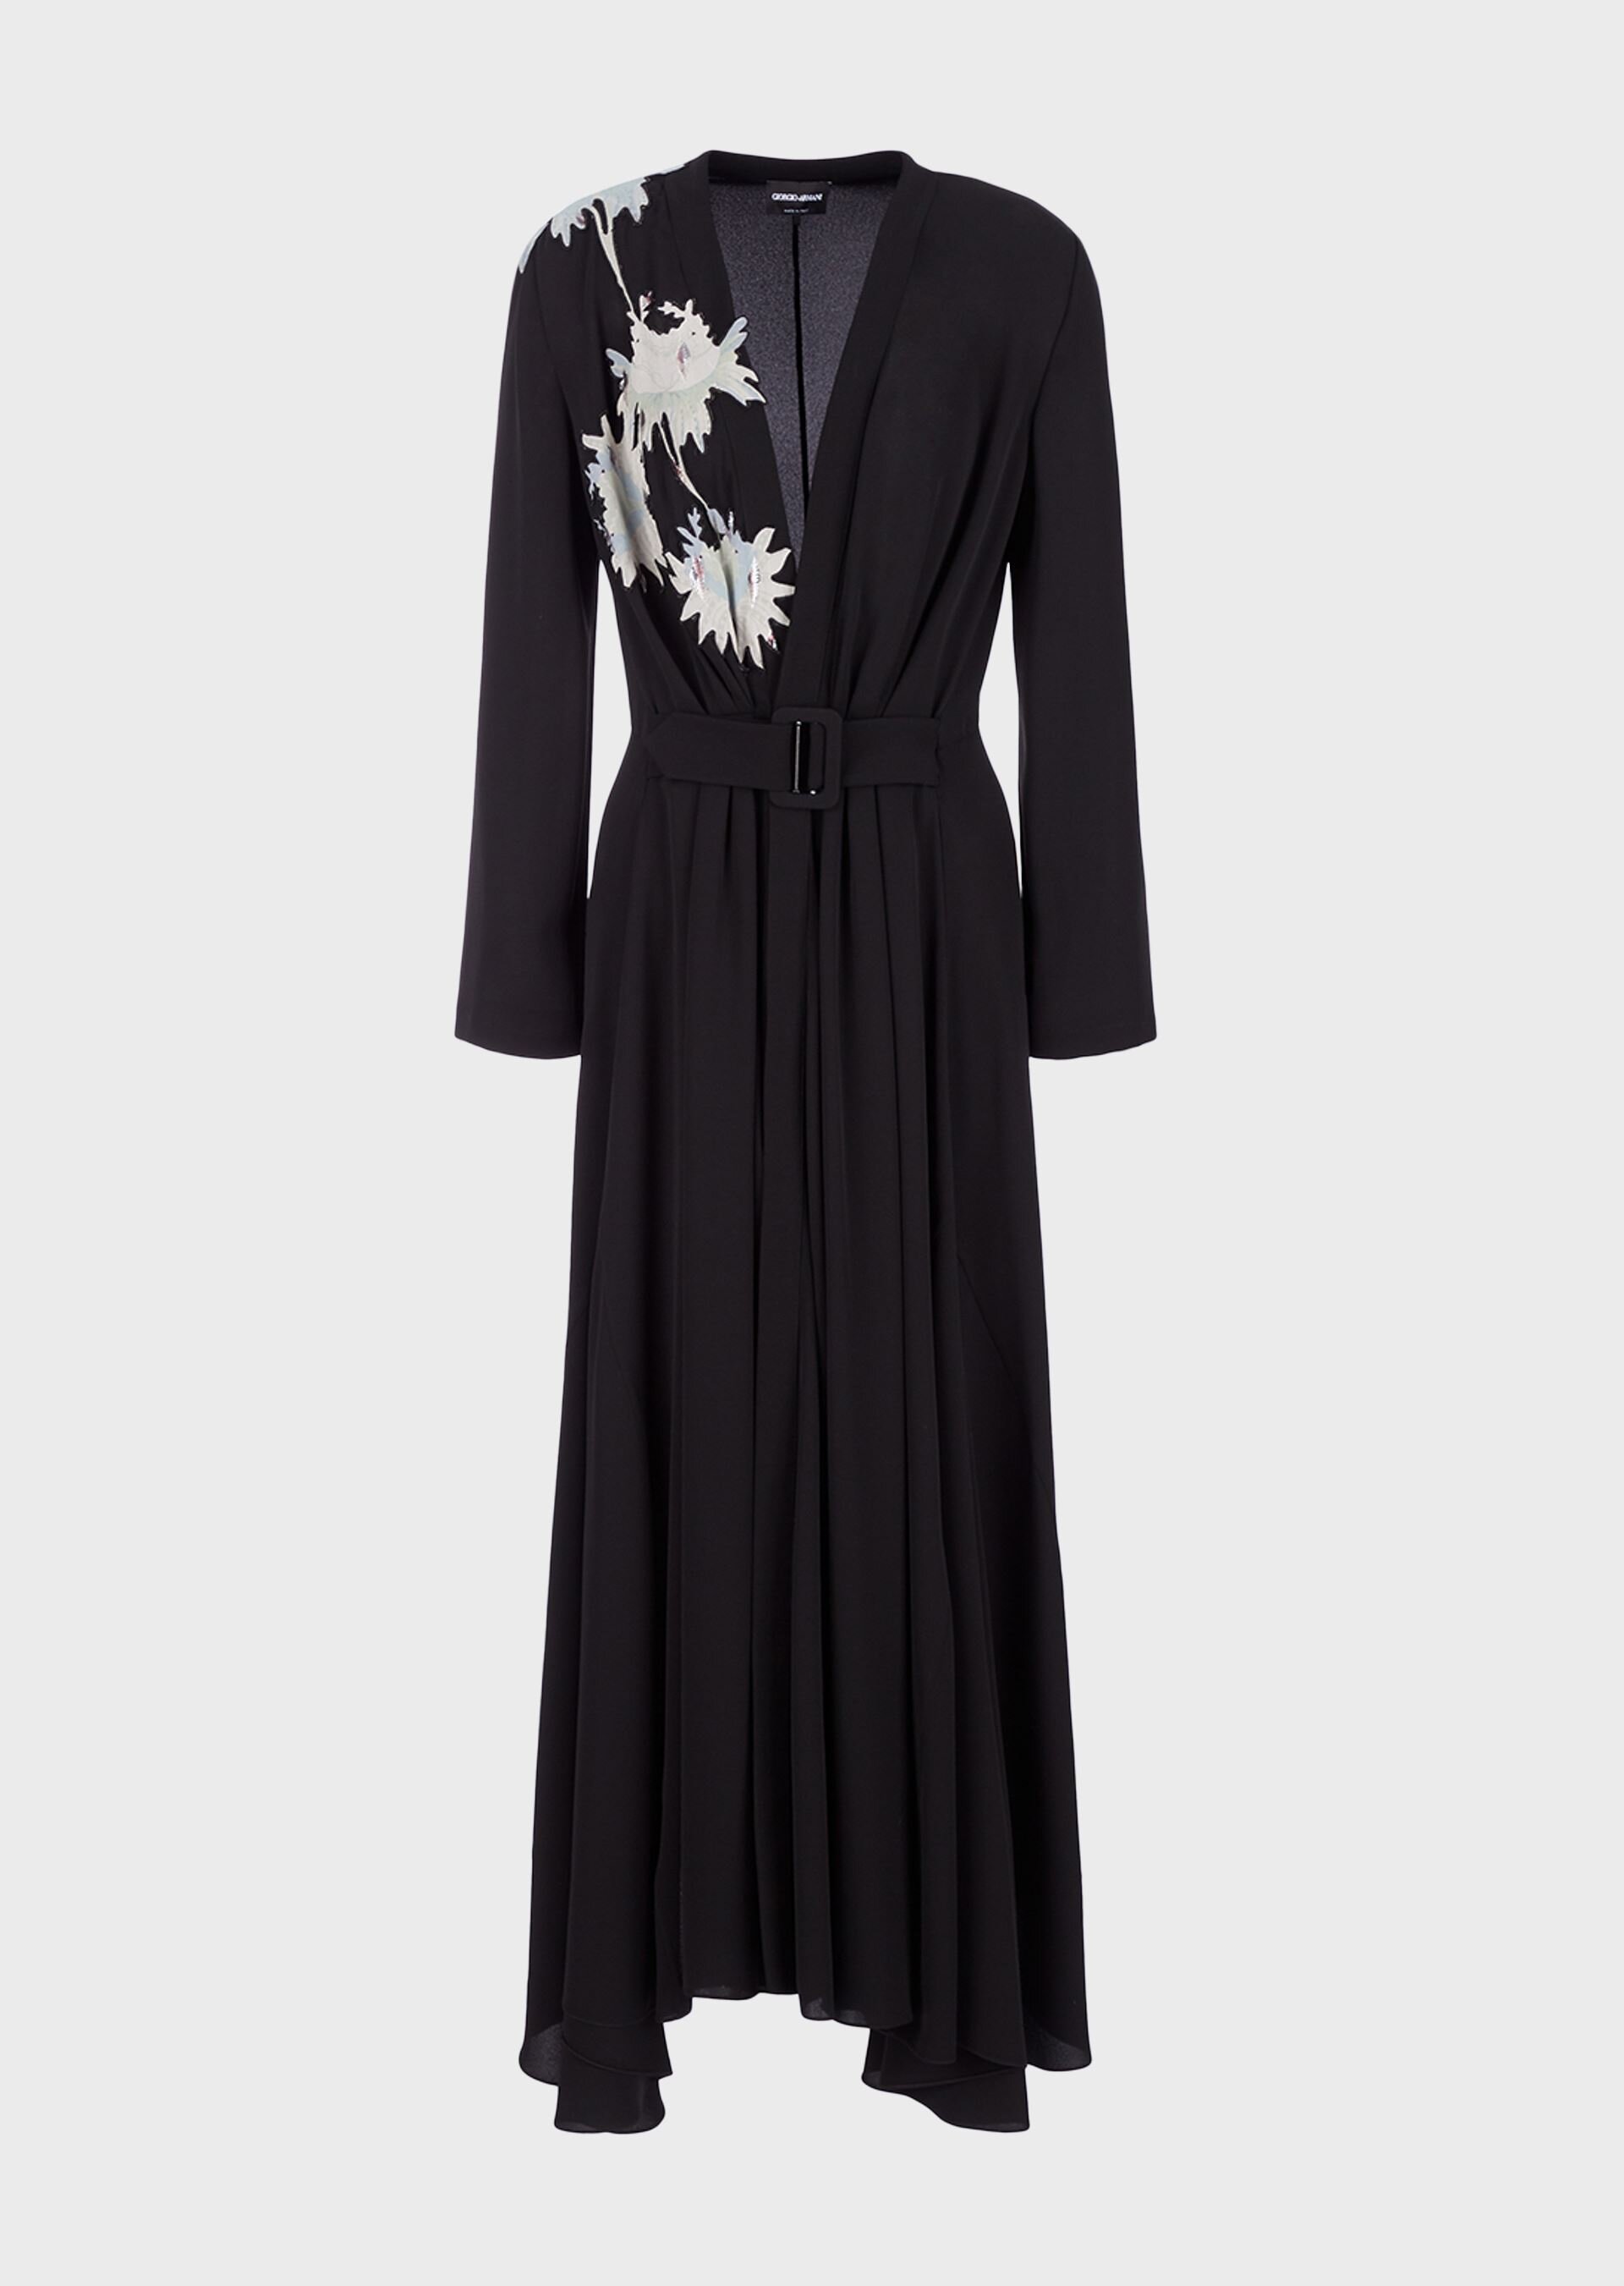 Giorgio Armani Strapless Crystal-Embellished Dress — UFO No More